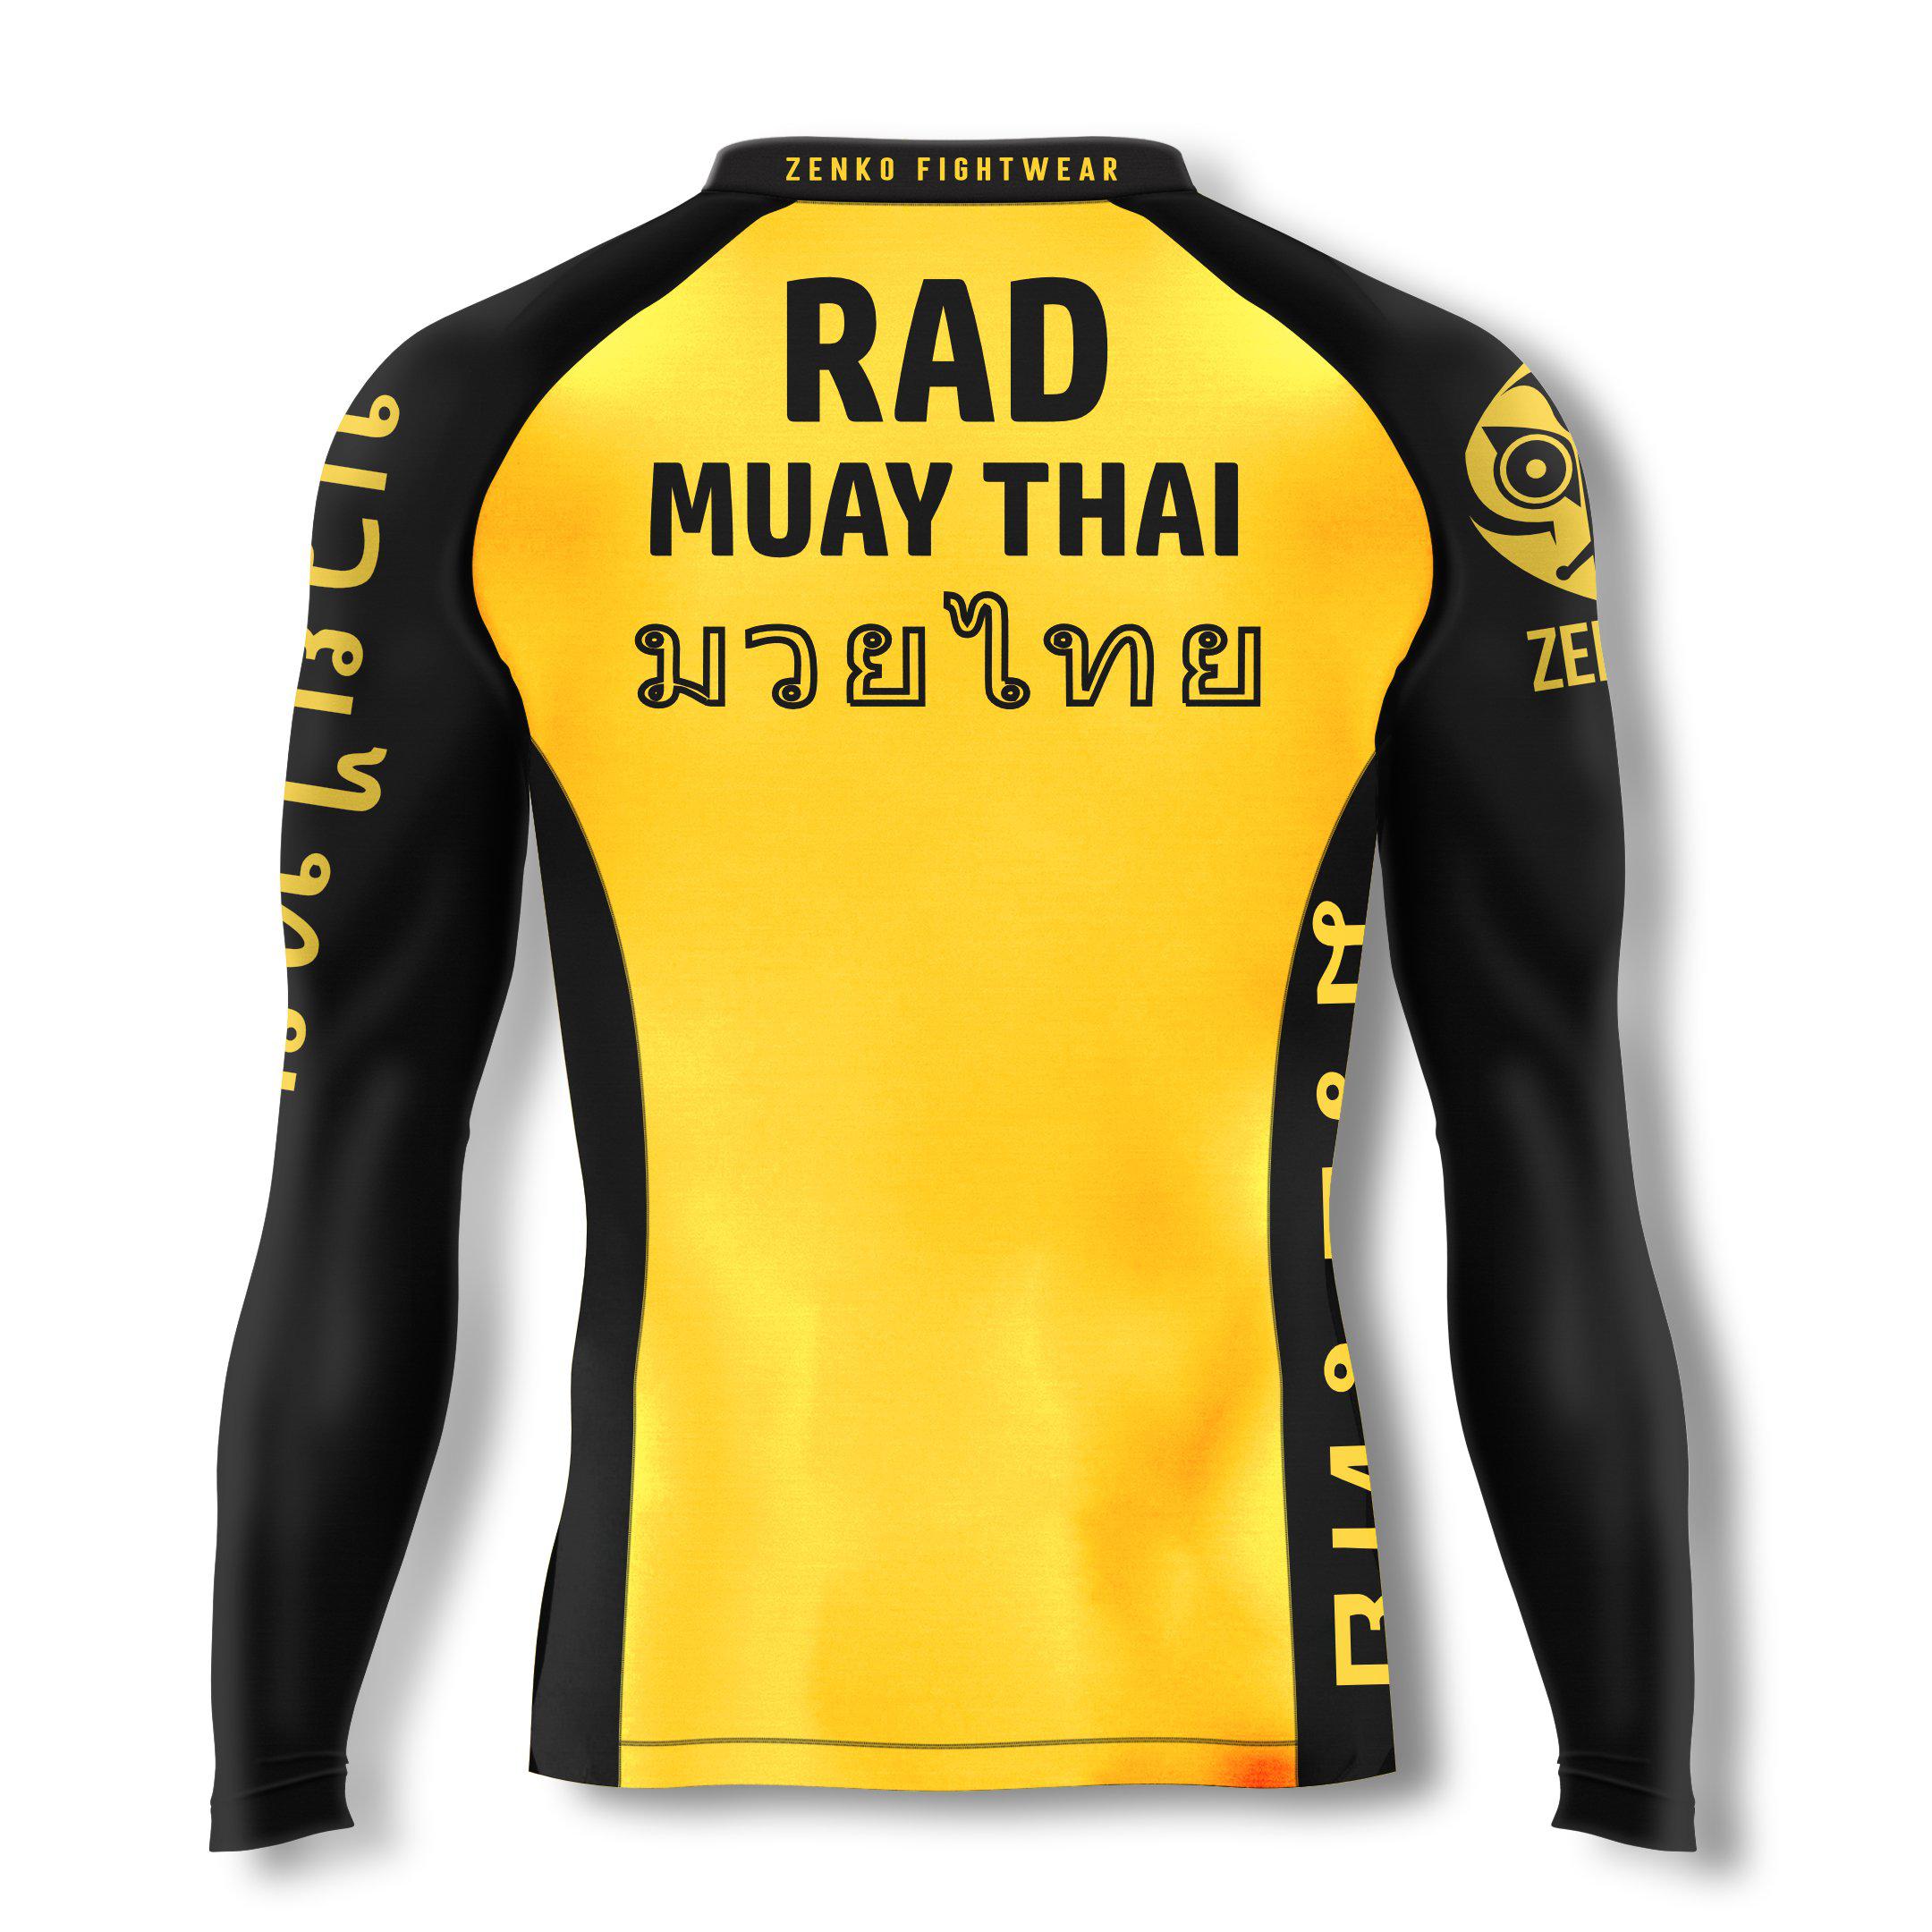 Rad Muay Thai RMT Long Sleeve Rashguard - Zenko Fightwear